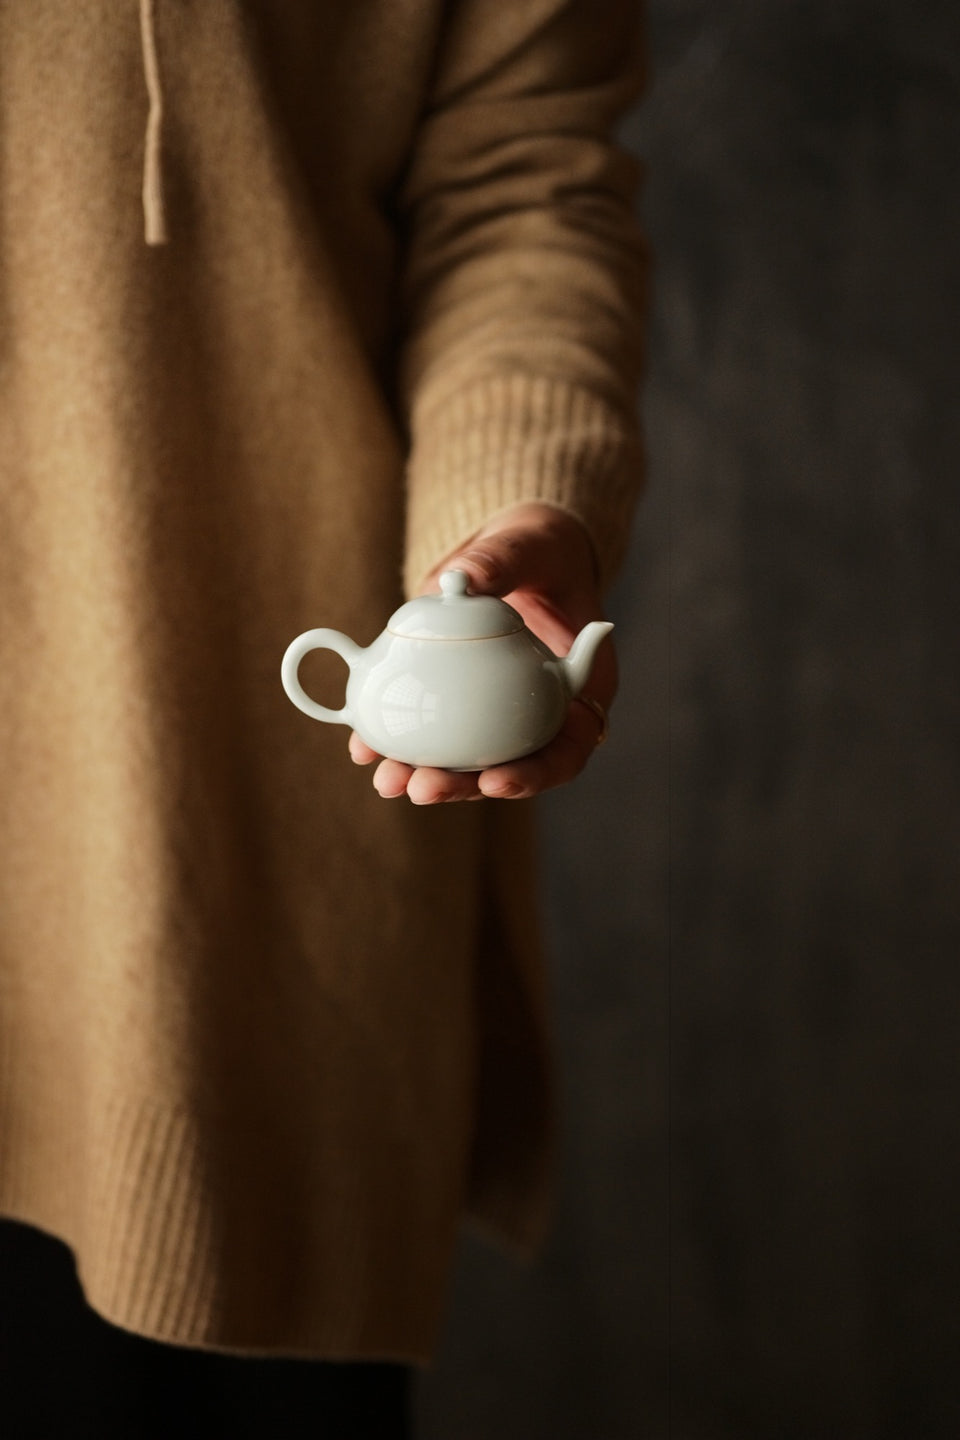 Petite Celadon Pear Shaped Porcelain Teapot